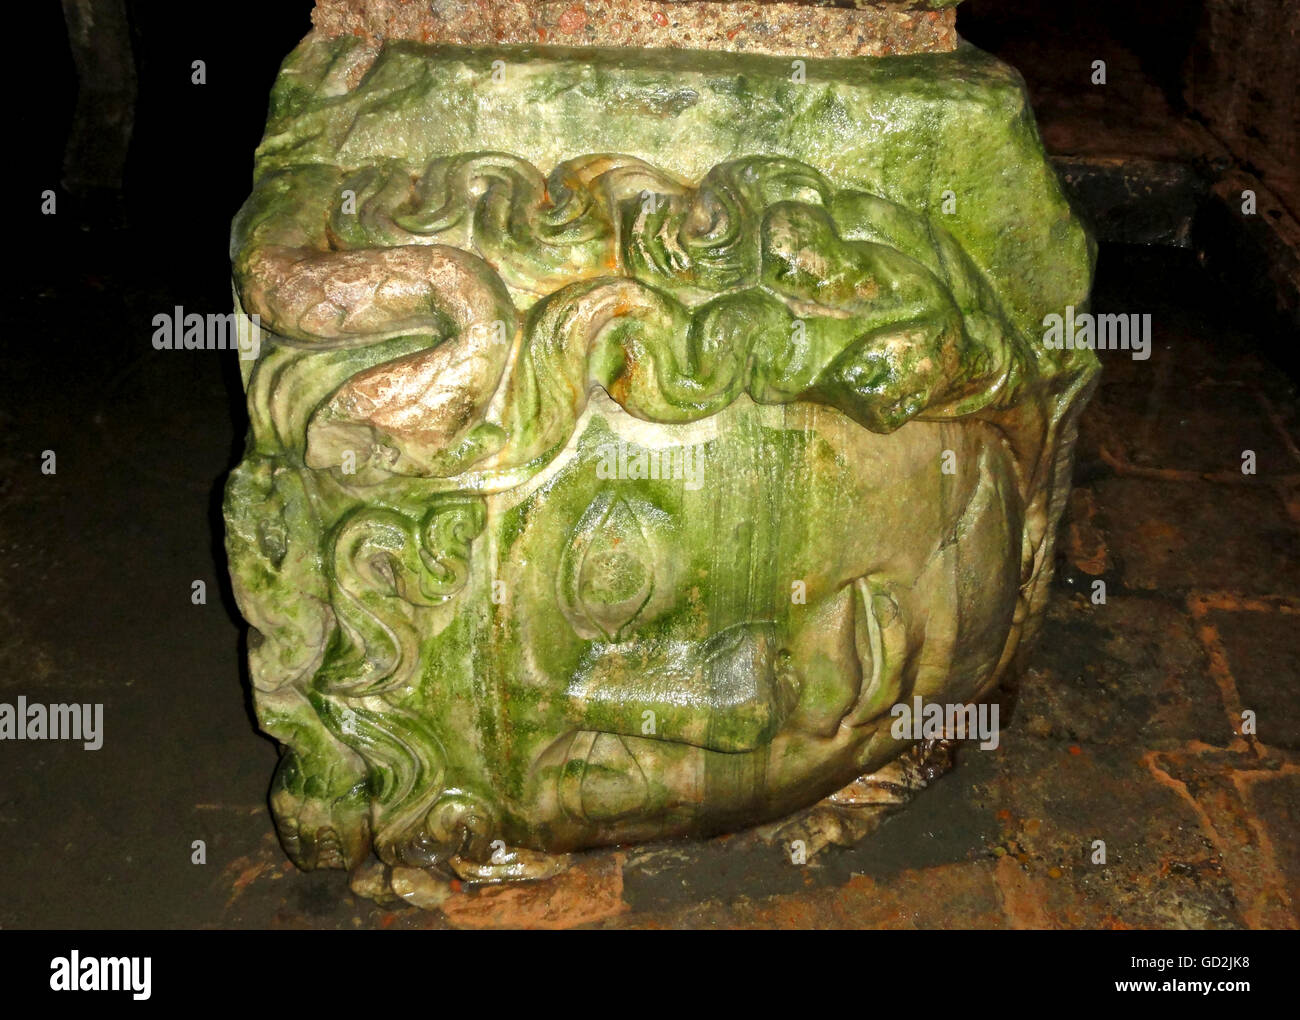 fine arts, marble, The first Medusa head pillar, Yerebatan cistern, Istanbul, Artist's Copyright has not to be cleared Stock Photo